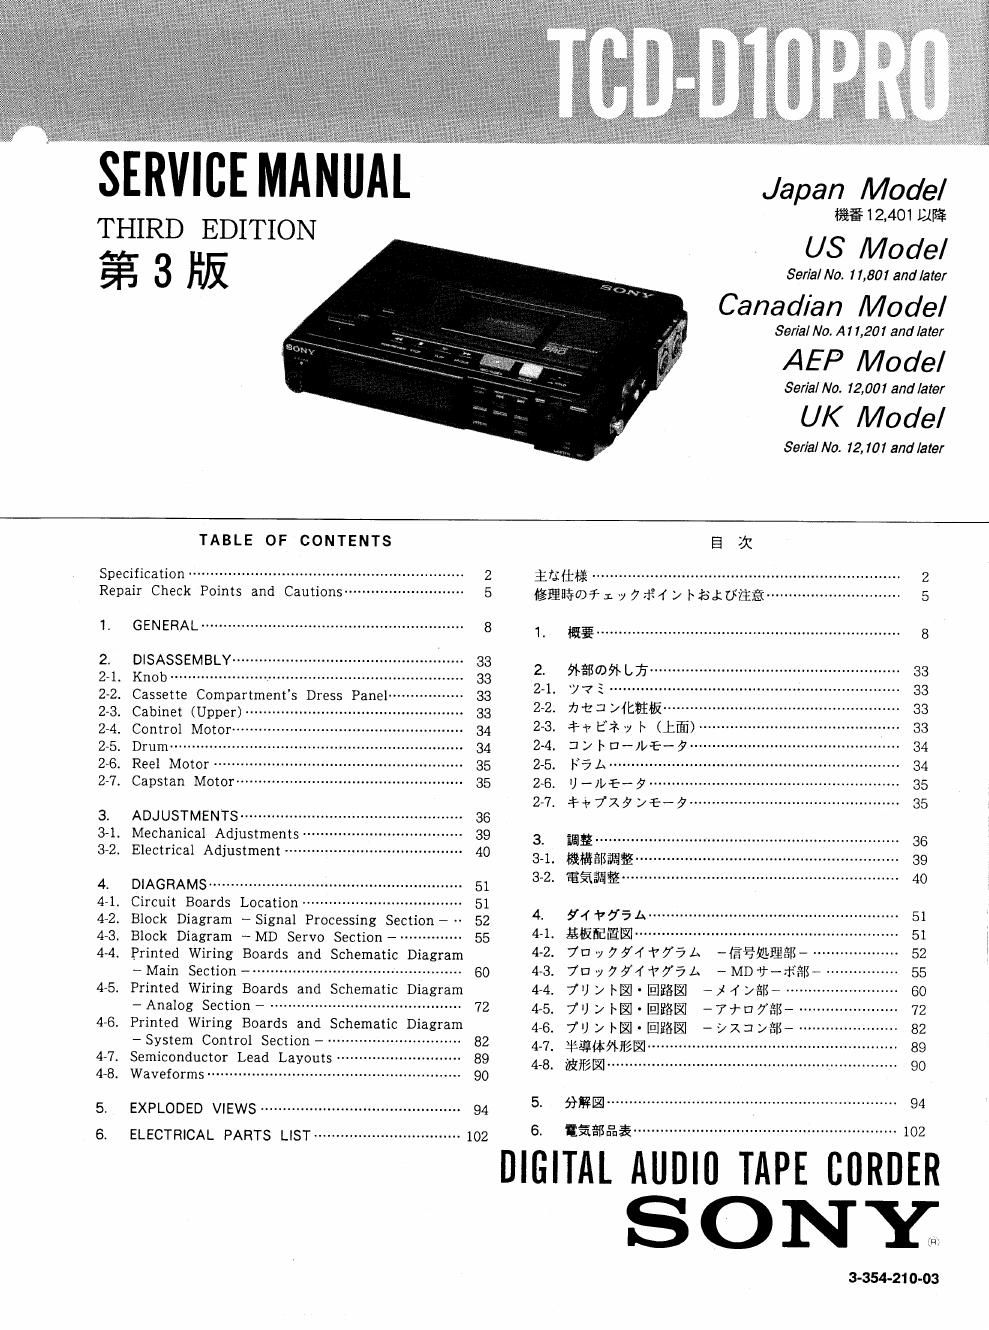 sony tcd d 10 pro service manual